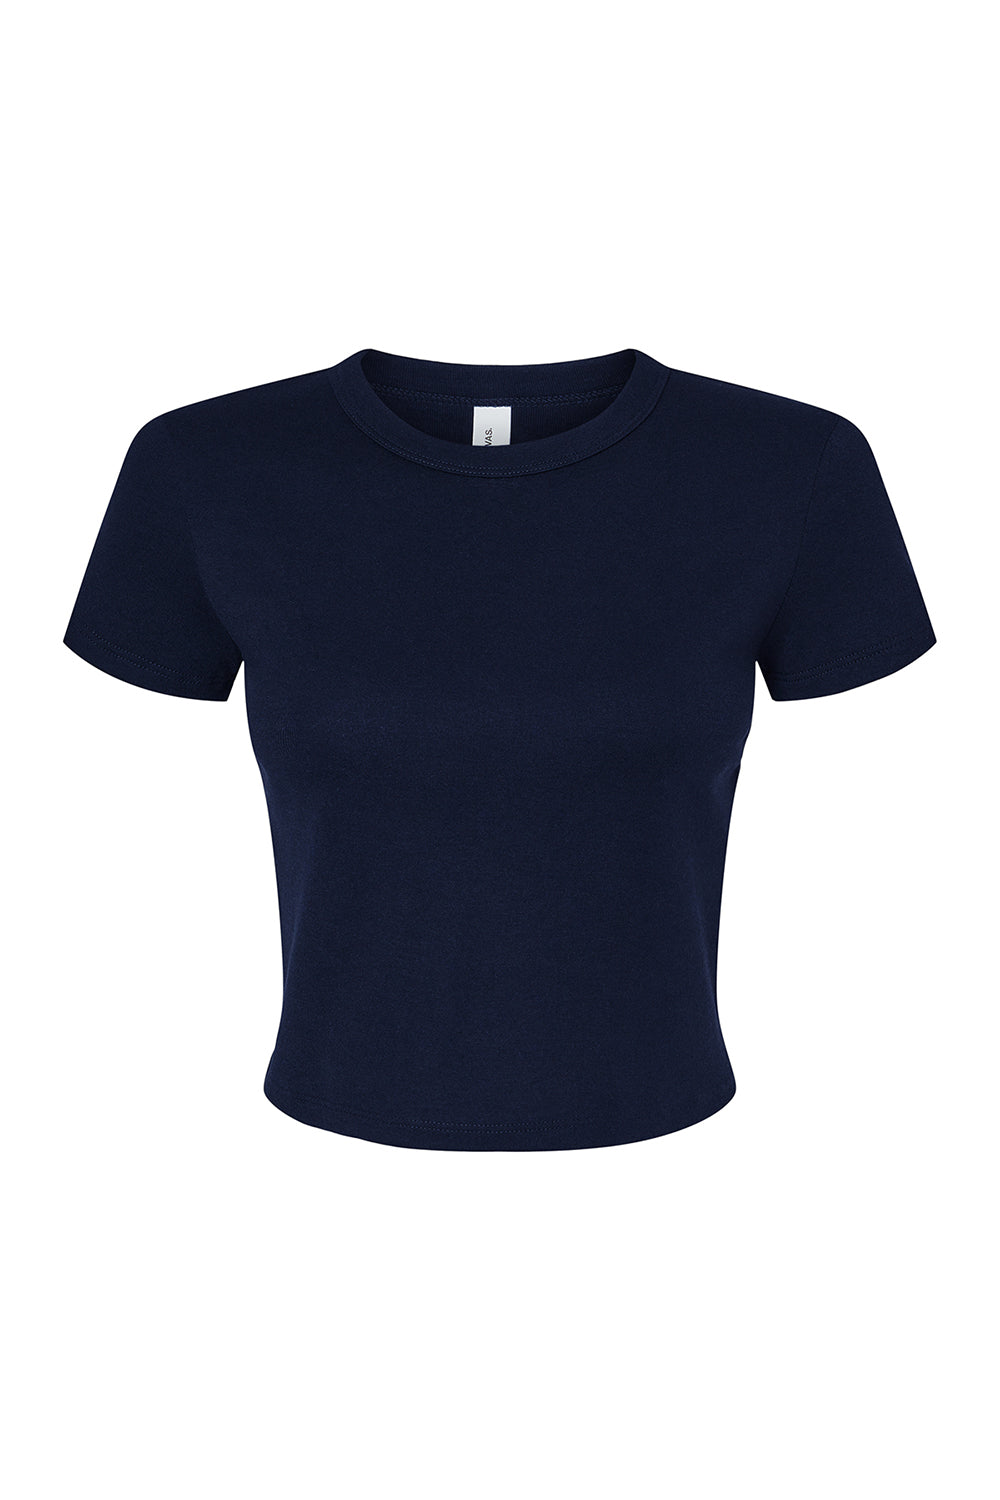 Bella + Canvas 1010BE Womens Micro Ribbed Short Sleeve Crewneck Baby T-Shirt Navy Blue Flat Front